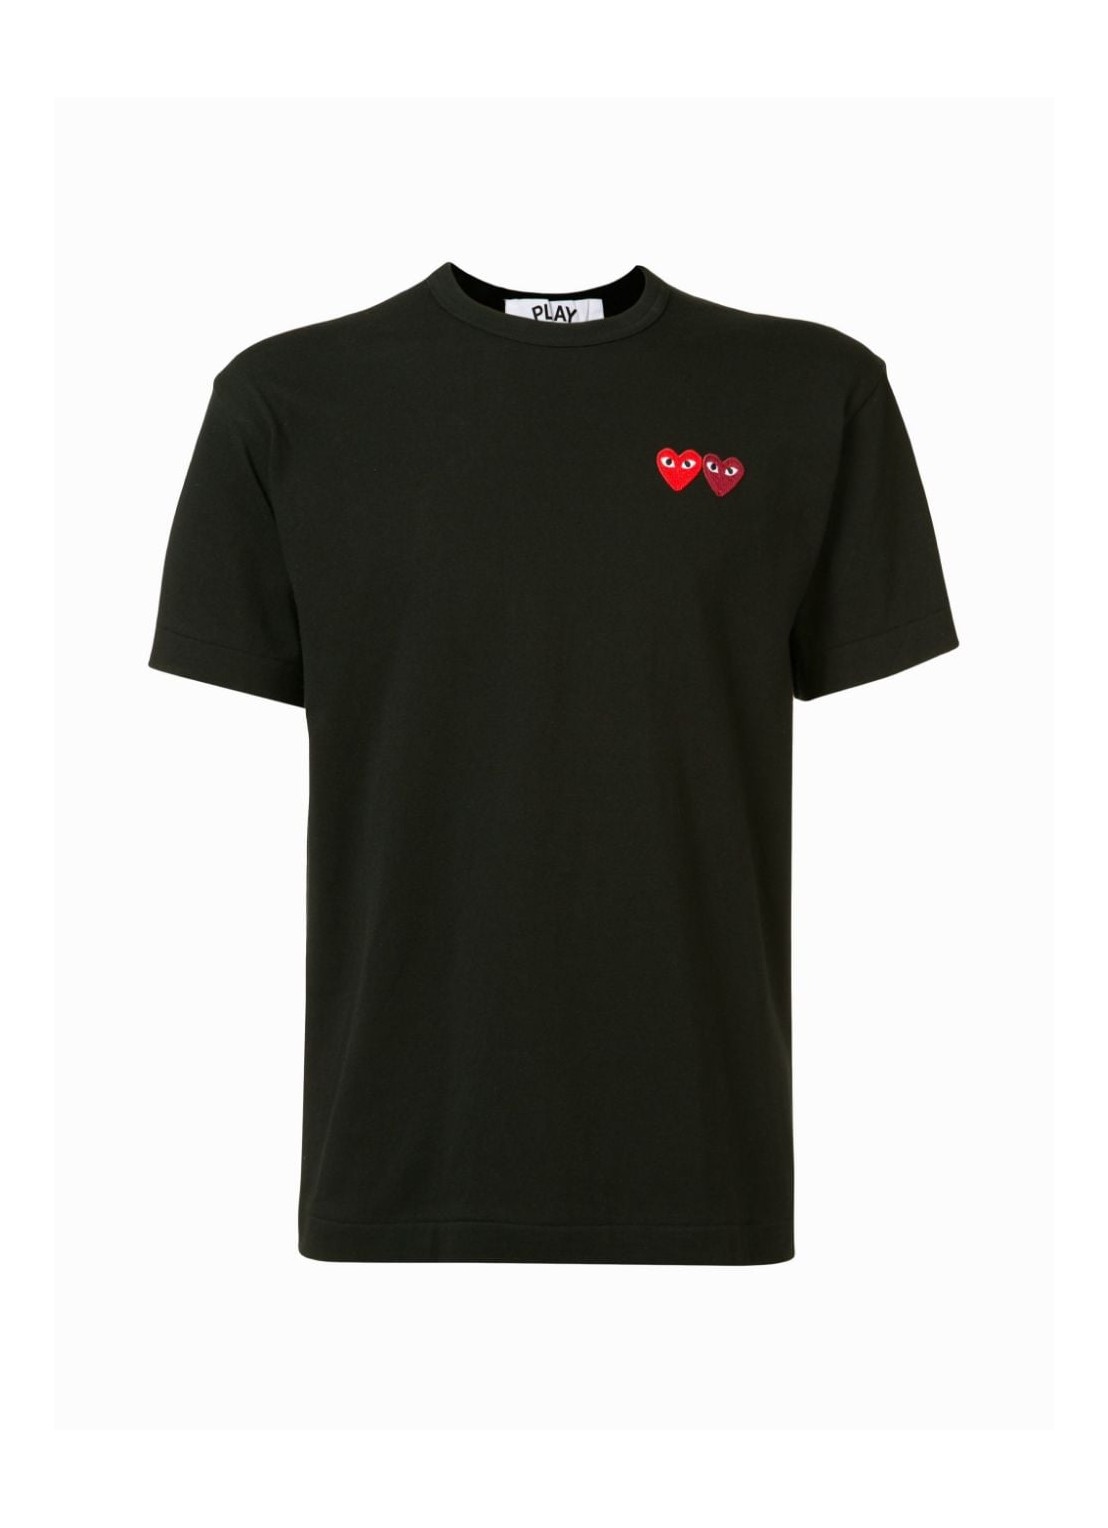 Camiseta comme des garcons t-shirt man play t-shirt p1t226 black talla XXL
 